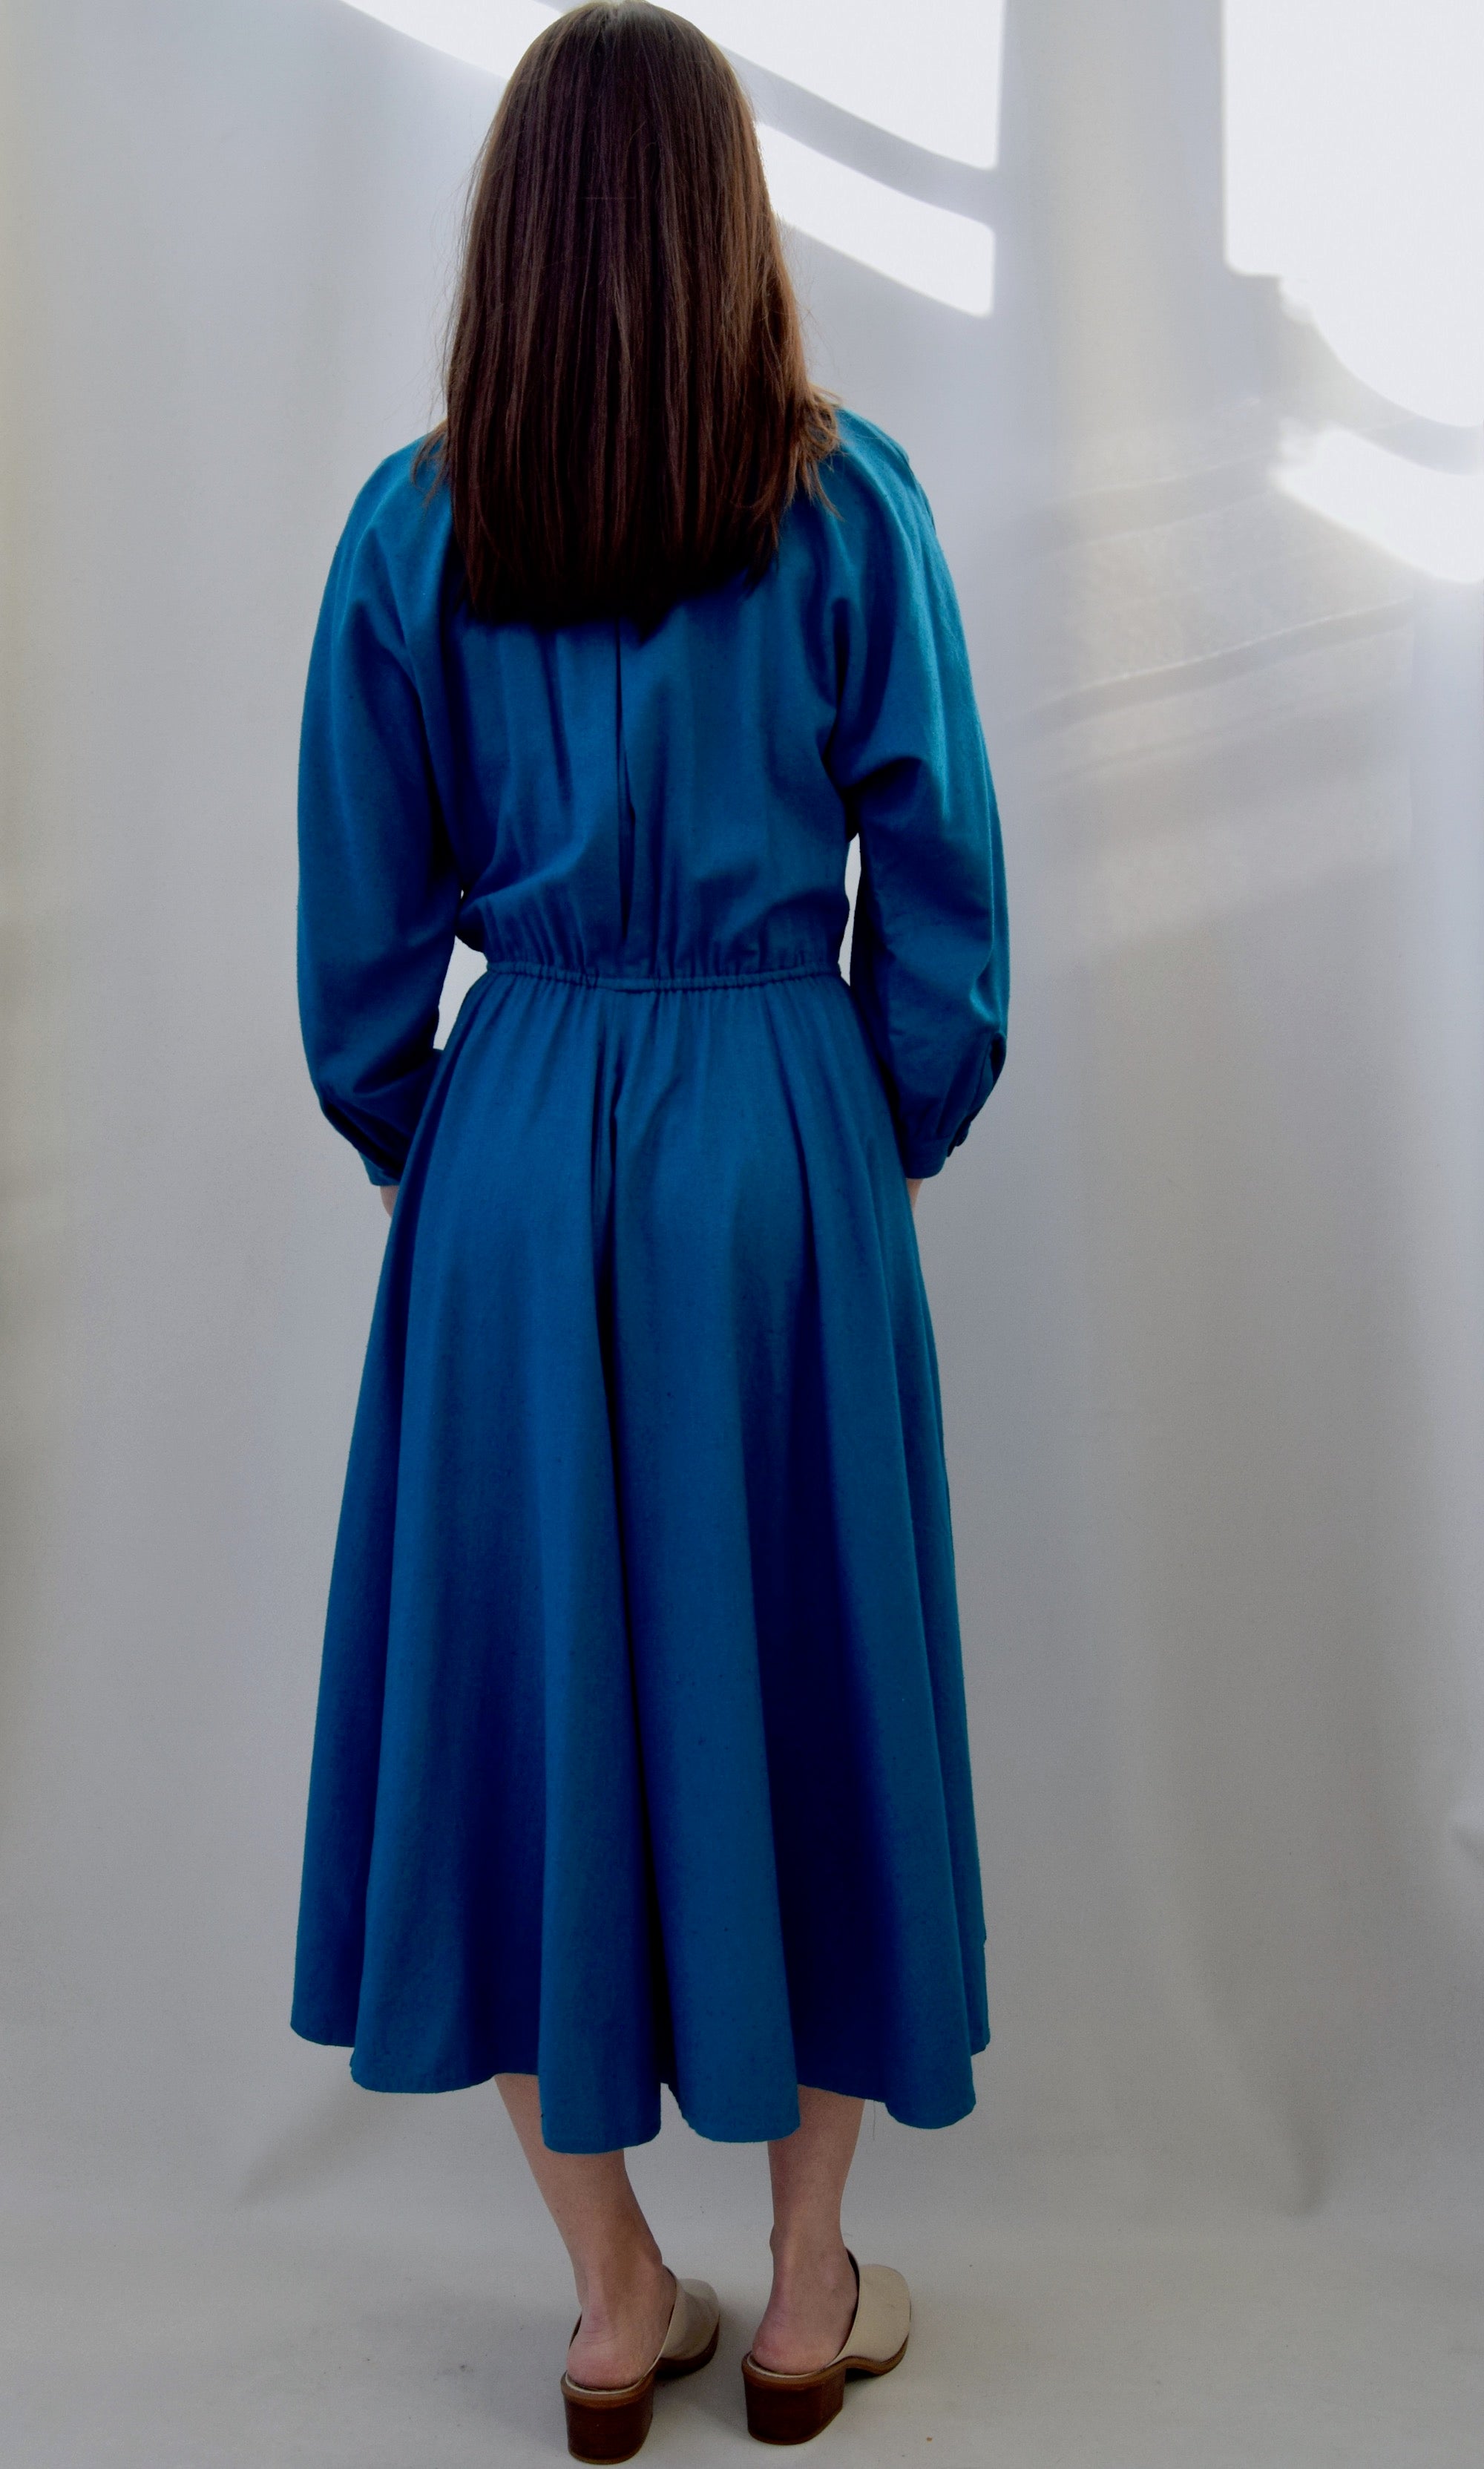 Turquoise Raw Silk Shirt Dress